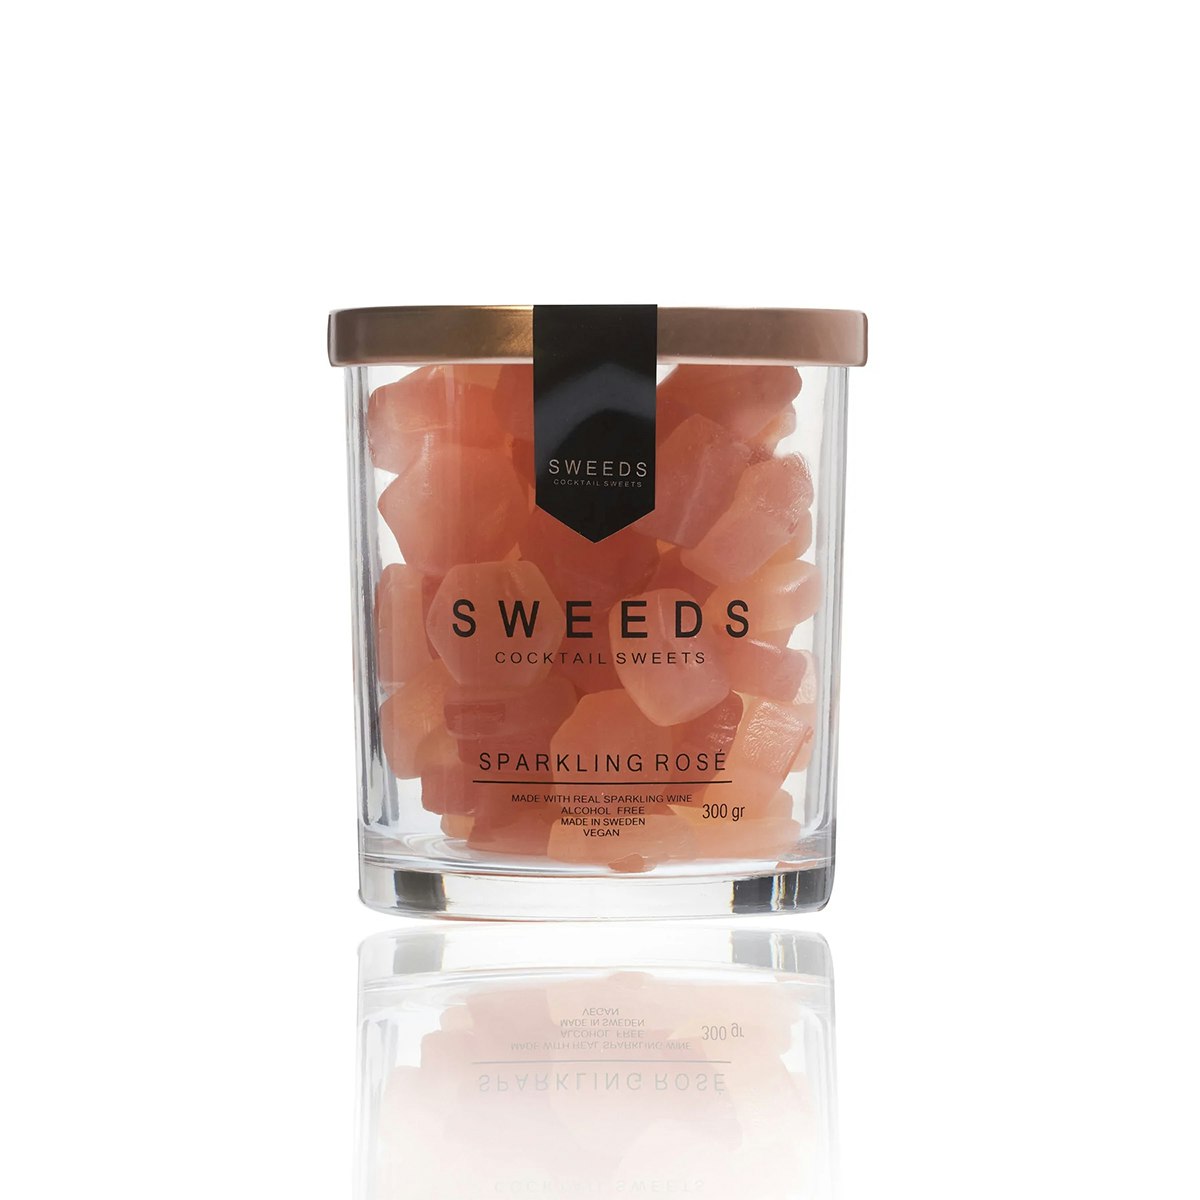 Sweeds Cocktail Sweets - Sparkling Rosé, 300 g